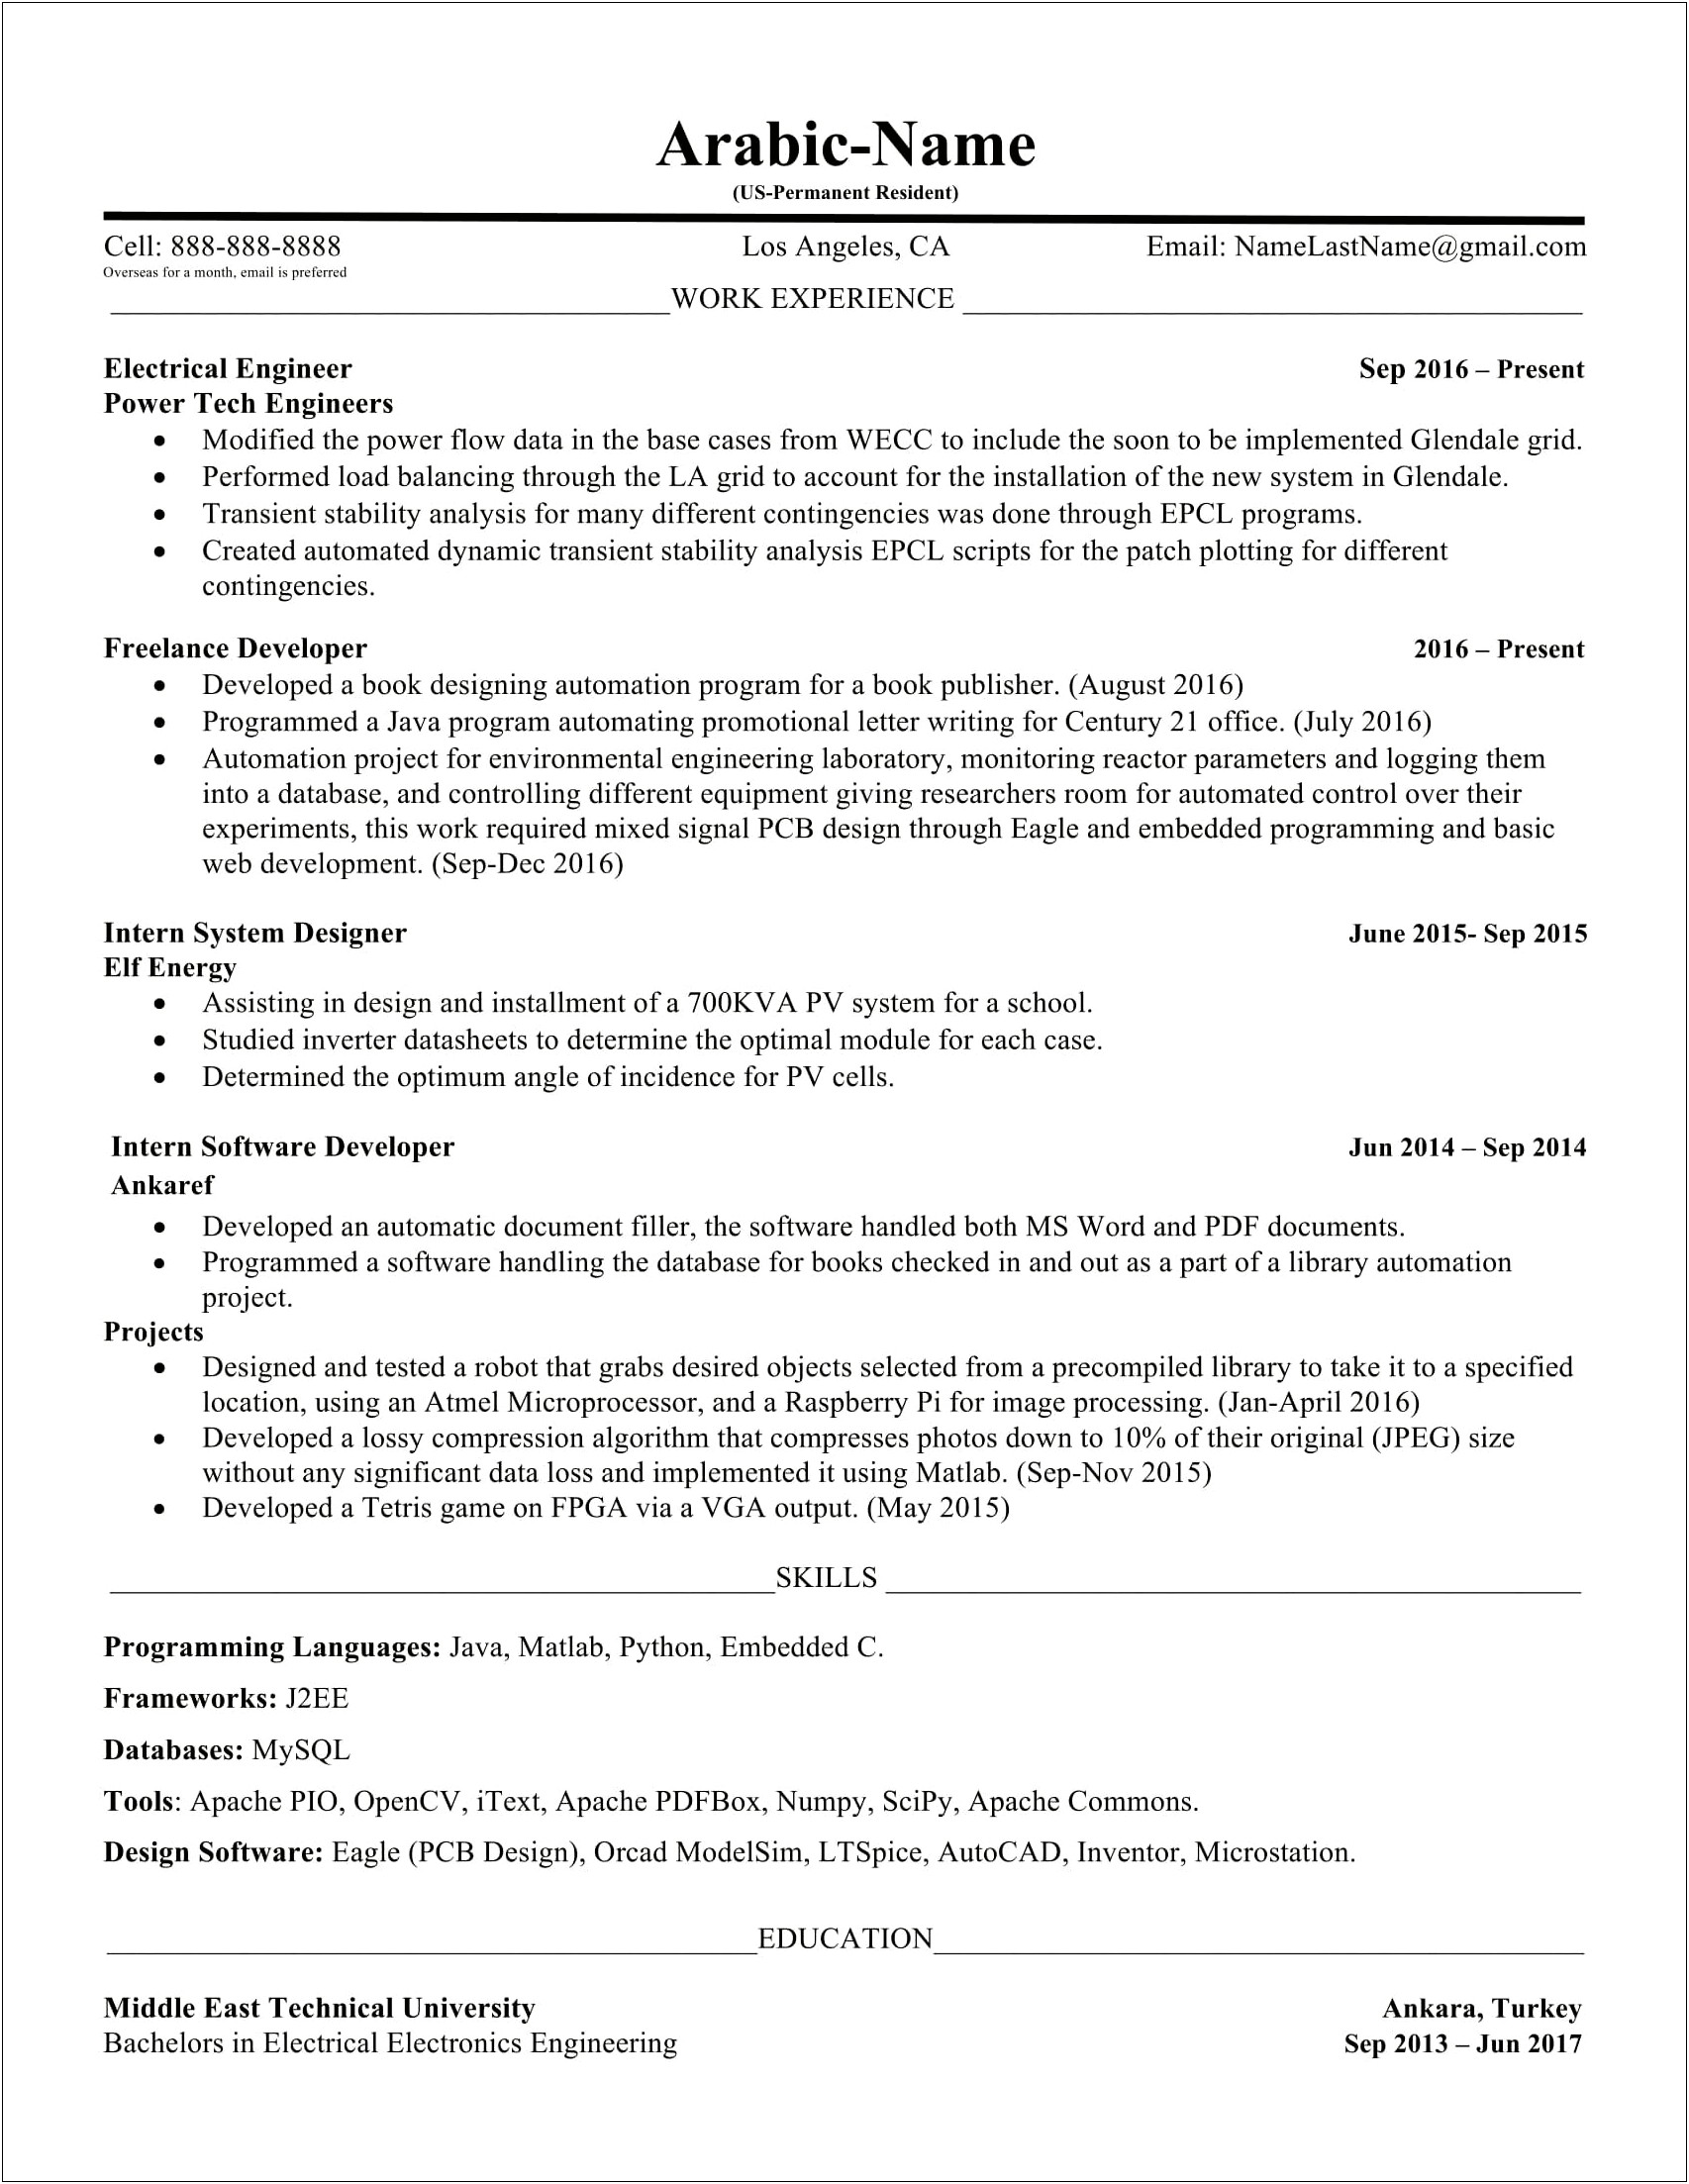 Resume Summary Examples Entry Level Engineer